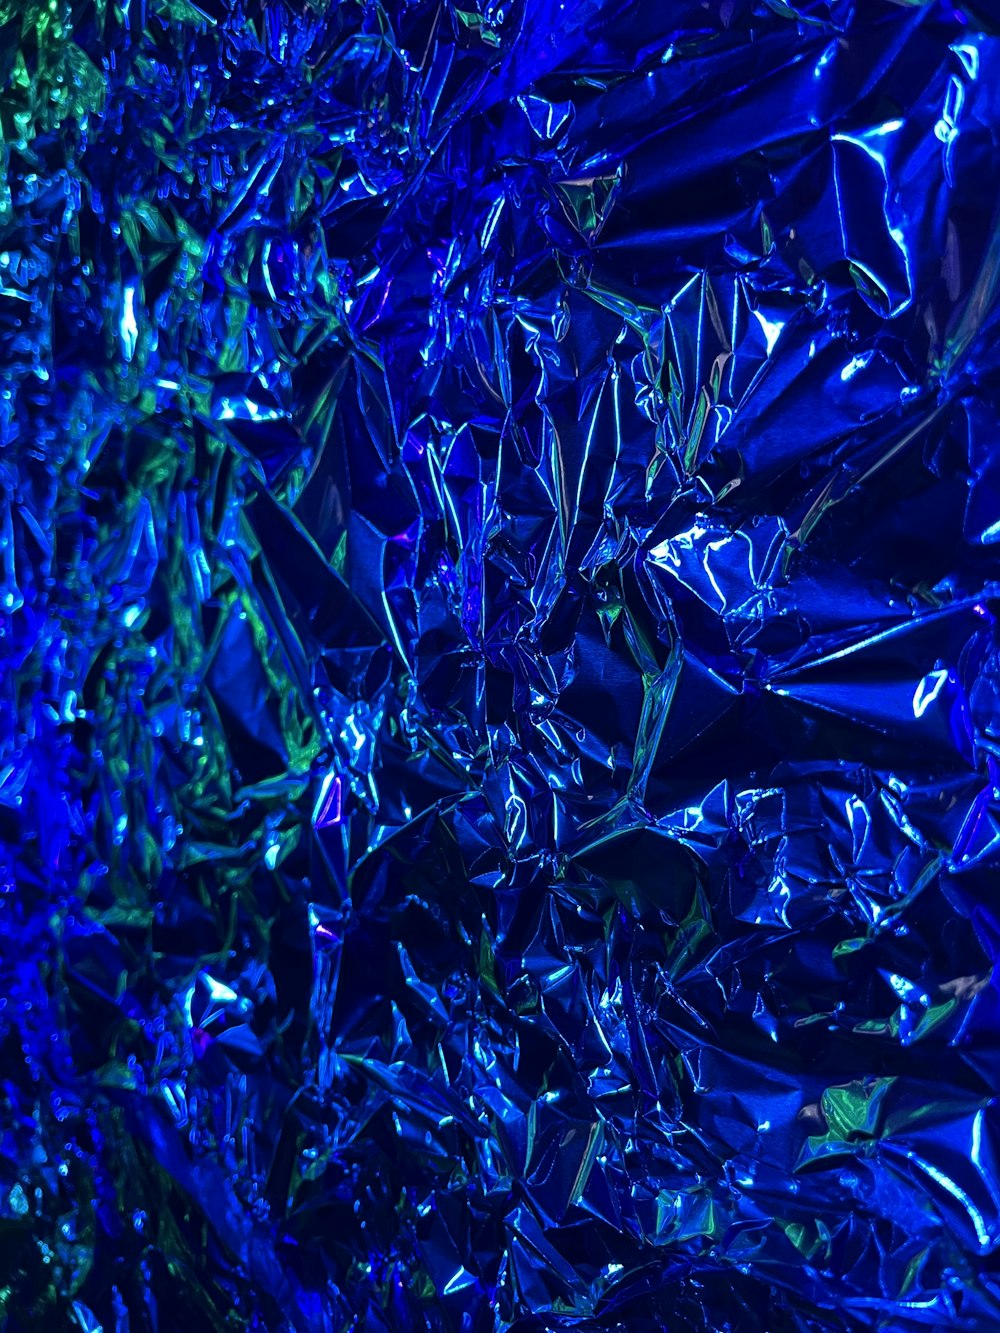 a close up of a shiny blue surface